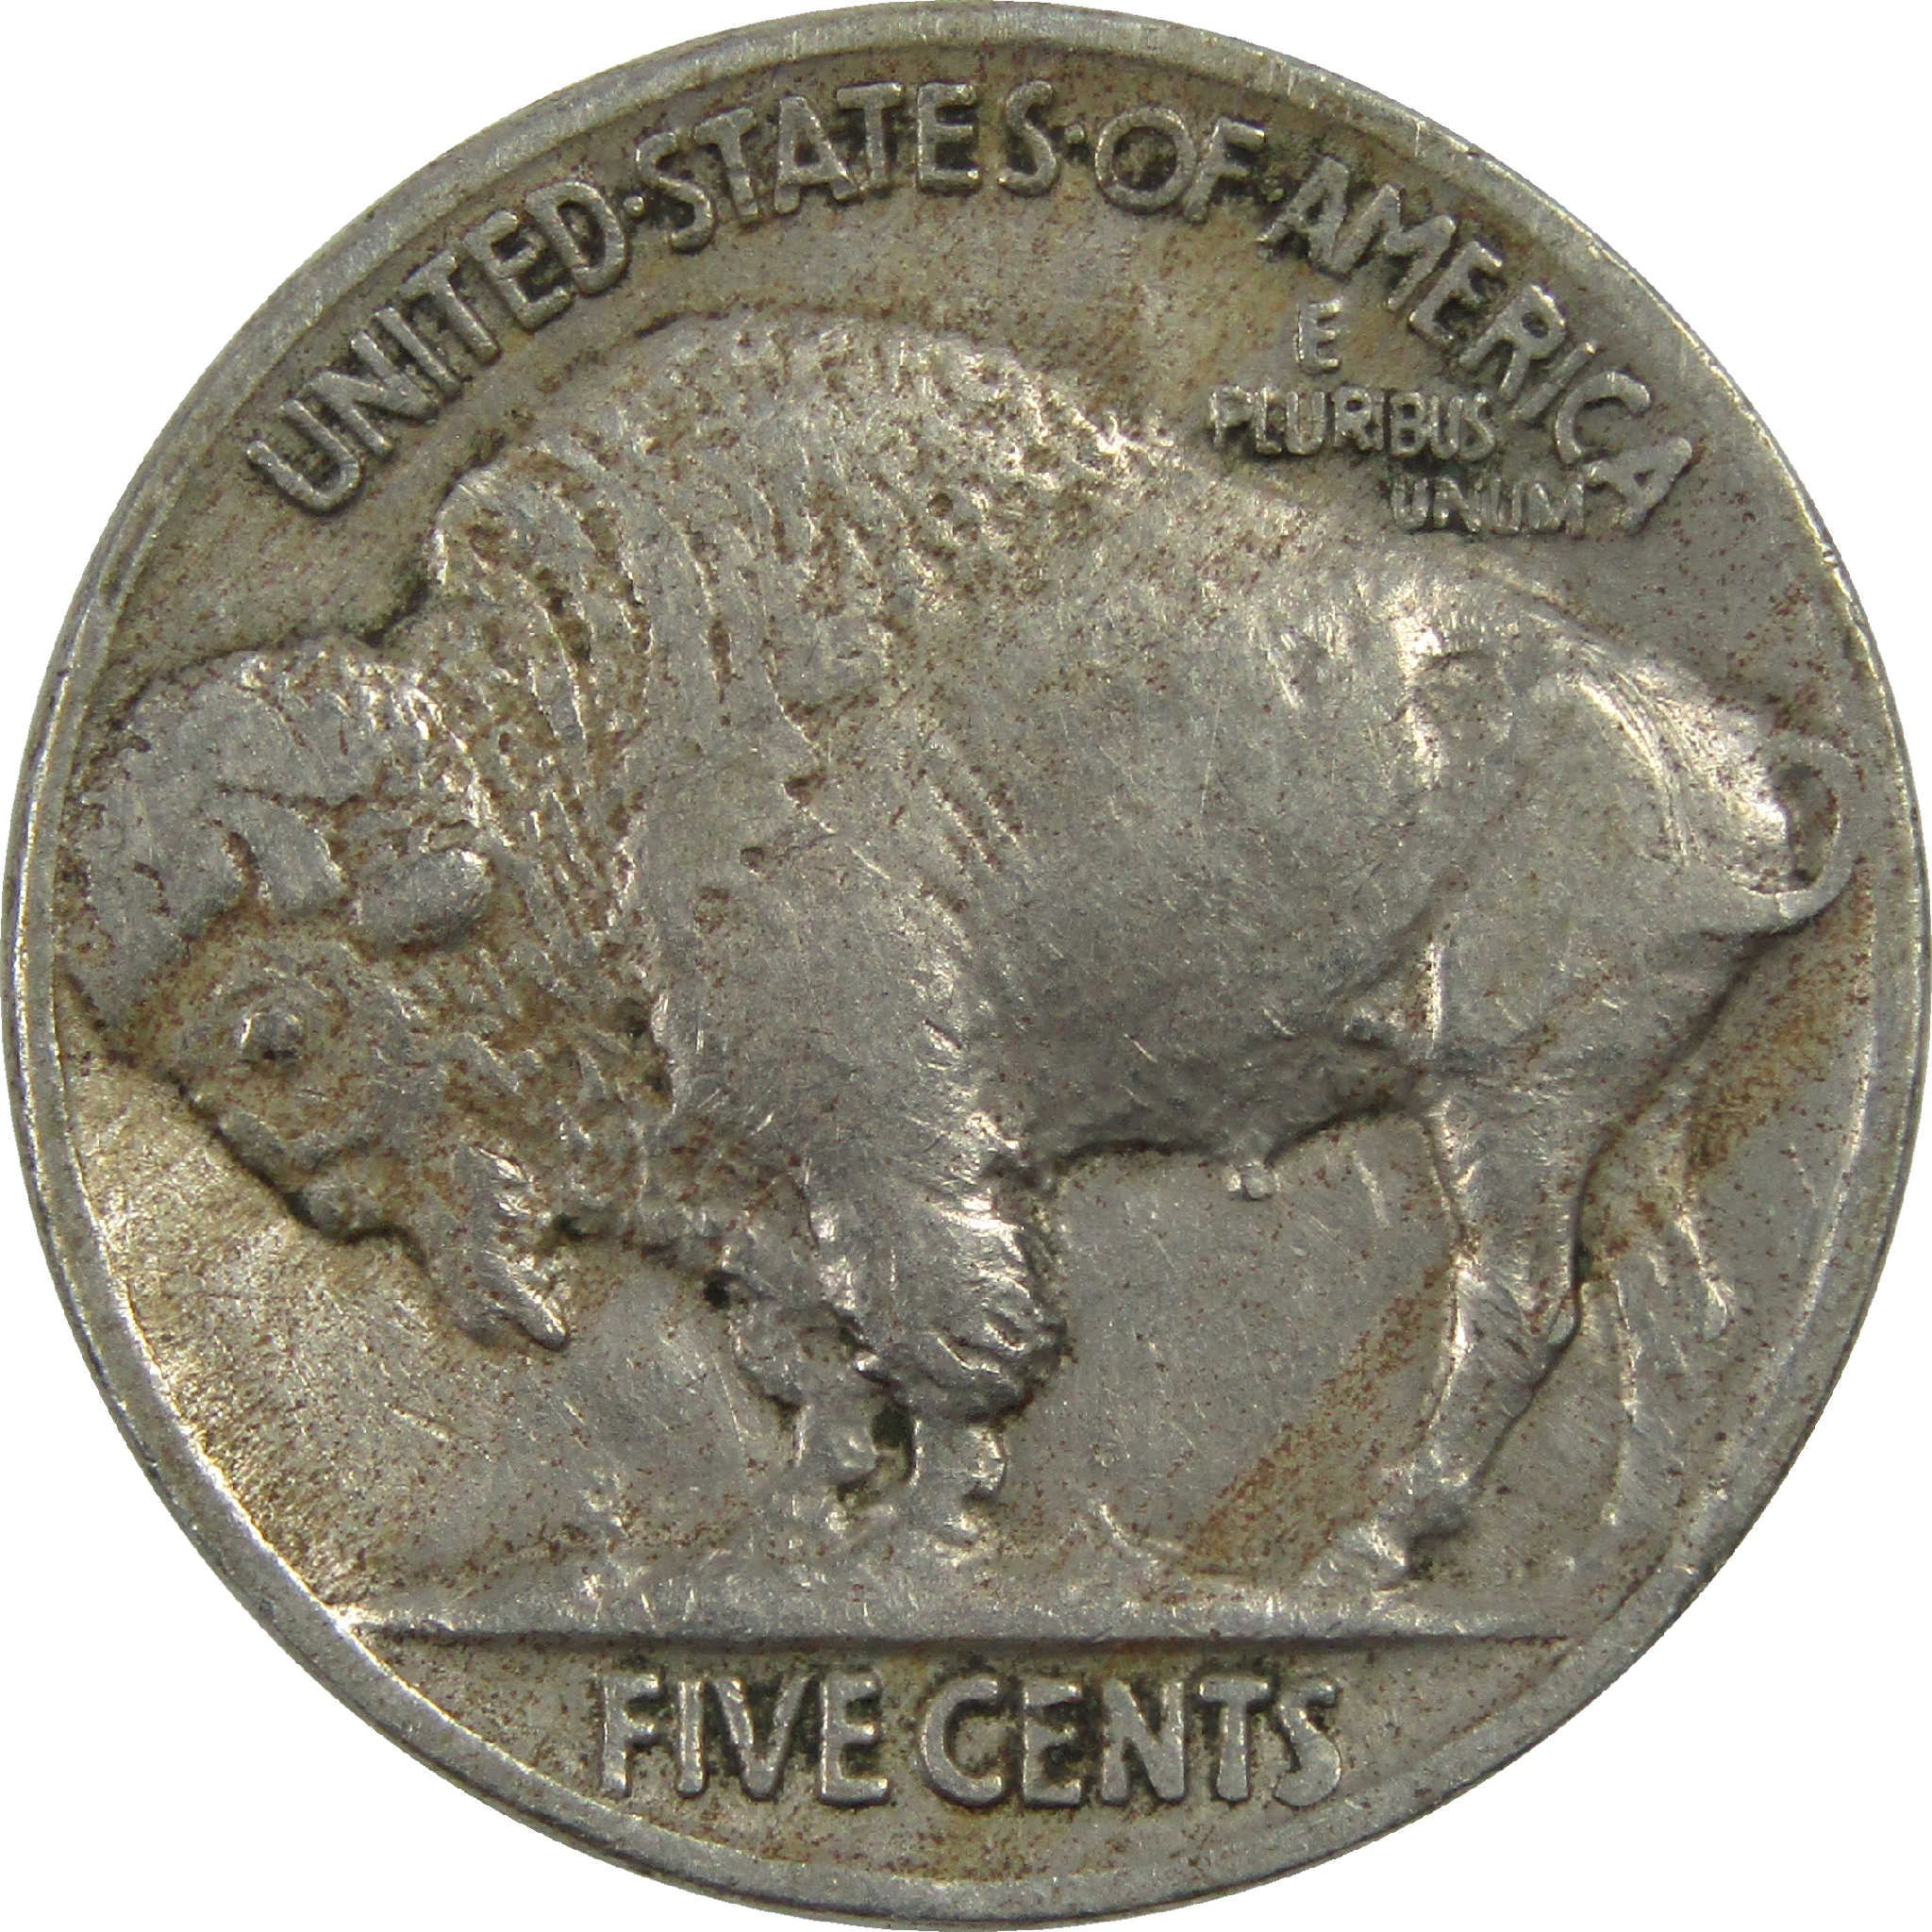 1921 Indian Head Buffalo Nickel VF Very Fine 5c Coin SKU:I13184